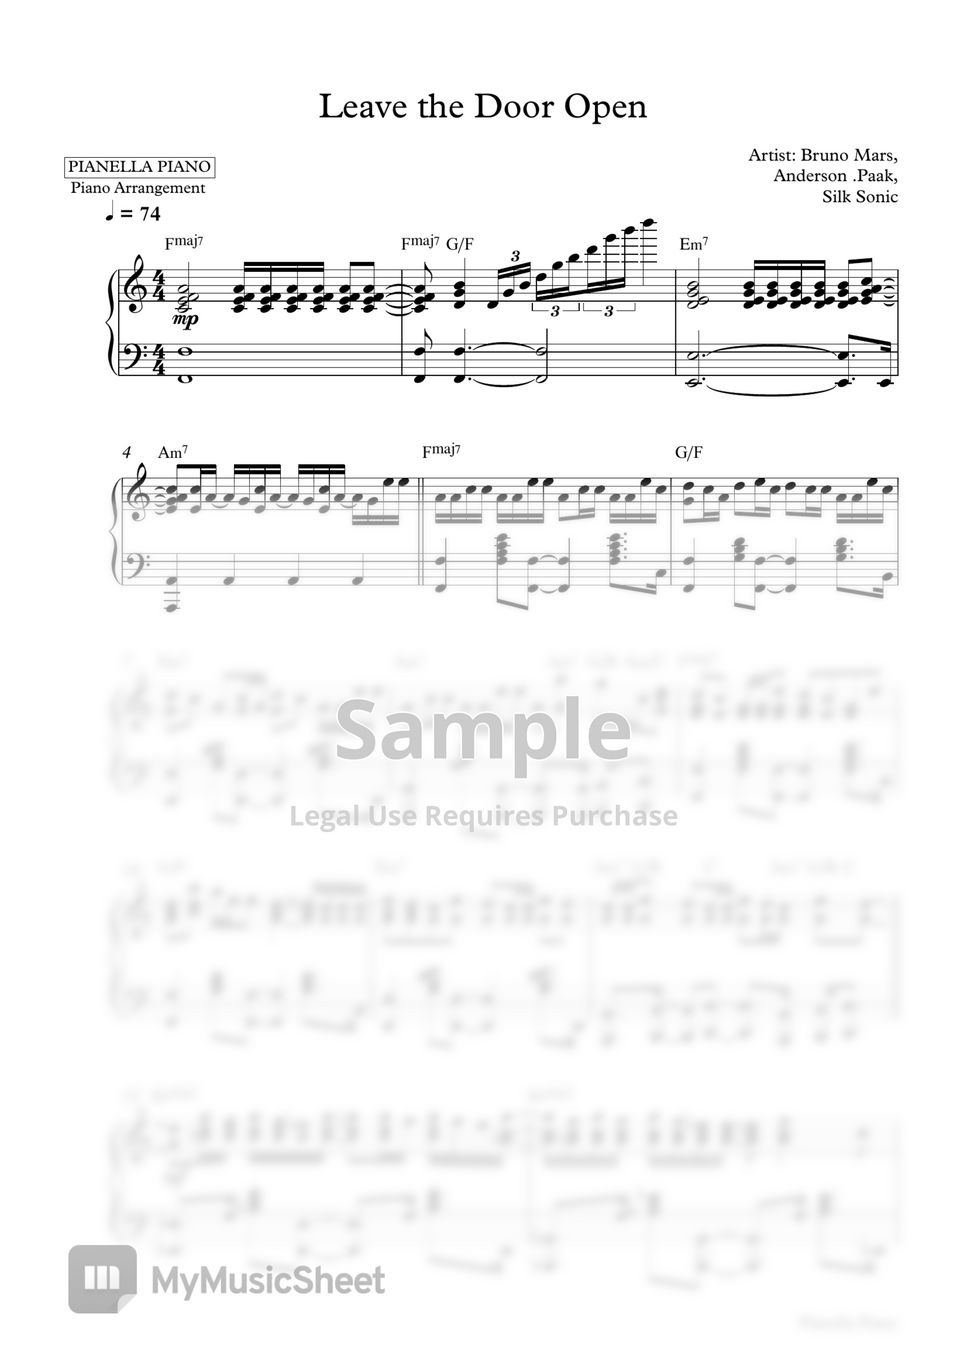 Bruno Mars, Anderson .Paak, Silk Sonic - Leave the Door Open (Piano Sheet) by Pianella Piano